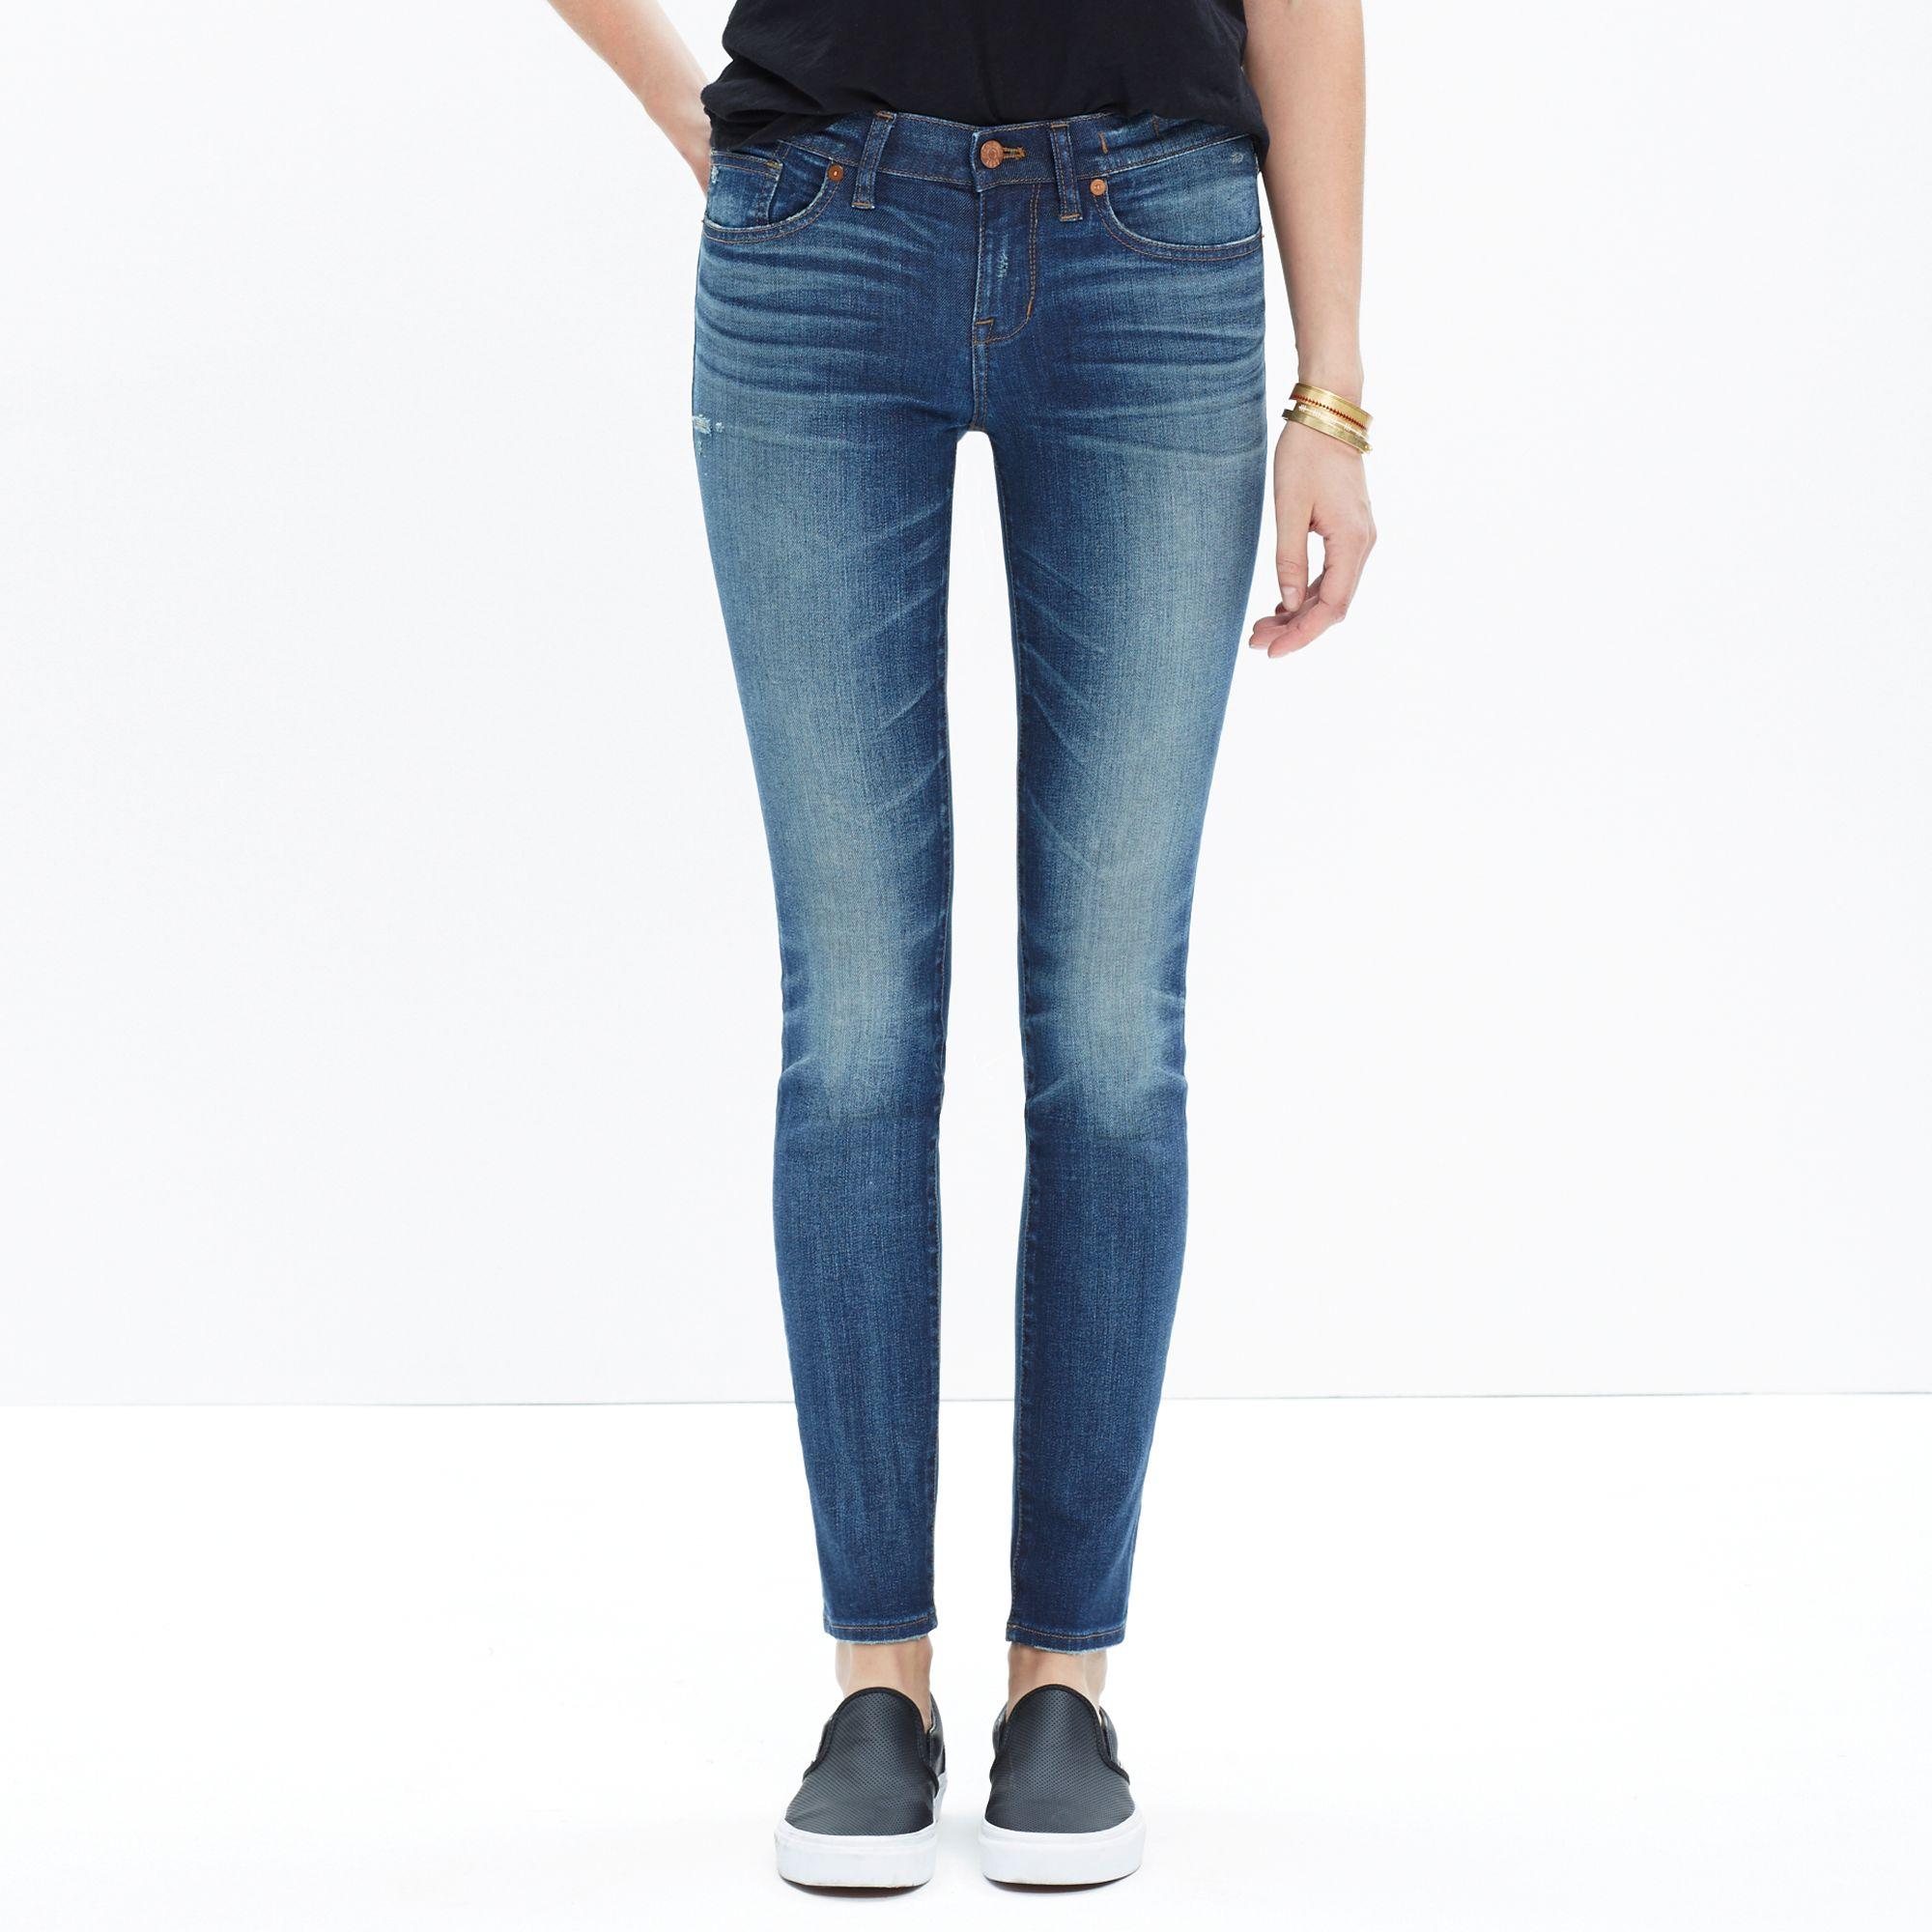 Madewell Denim Skinny Skinny Jeans In Edmonton Wash in Blue - Lyst